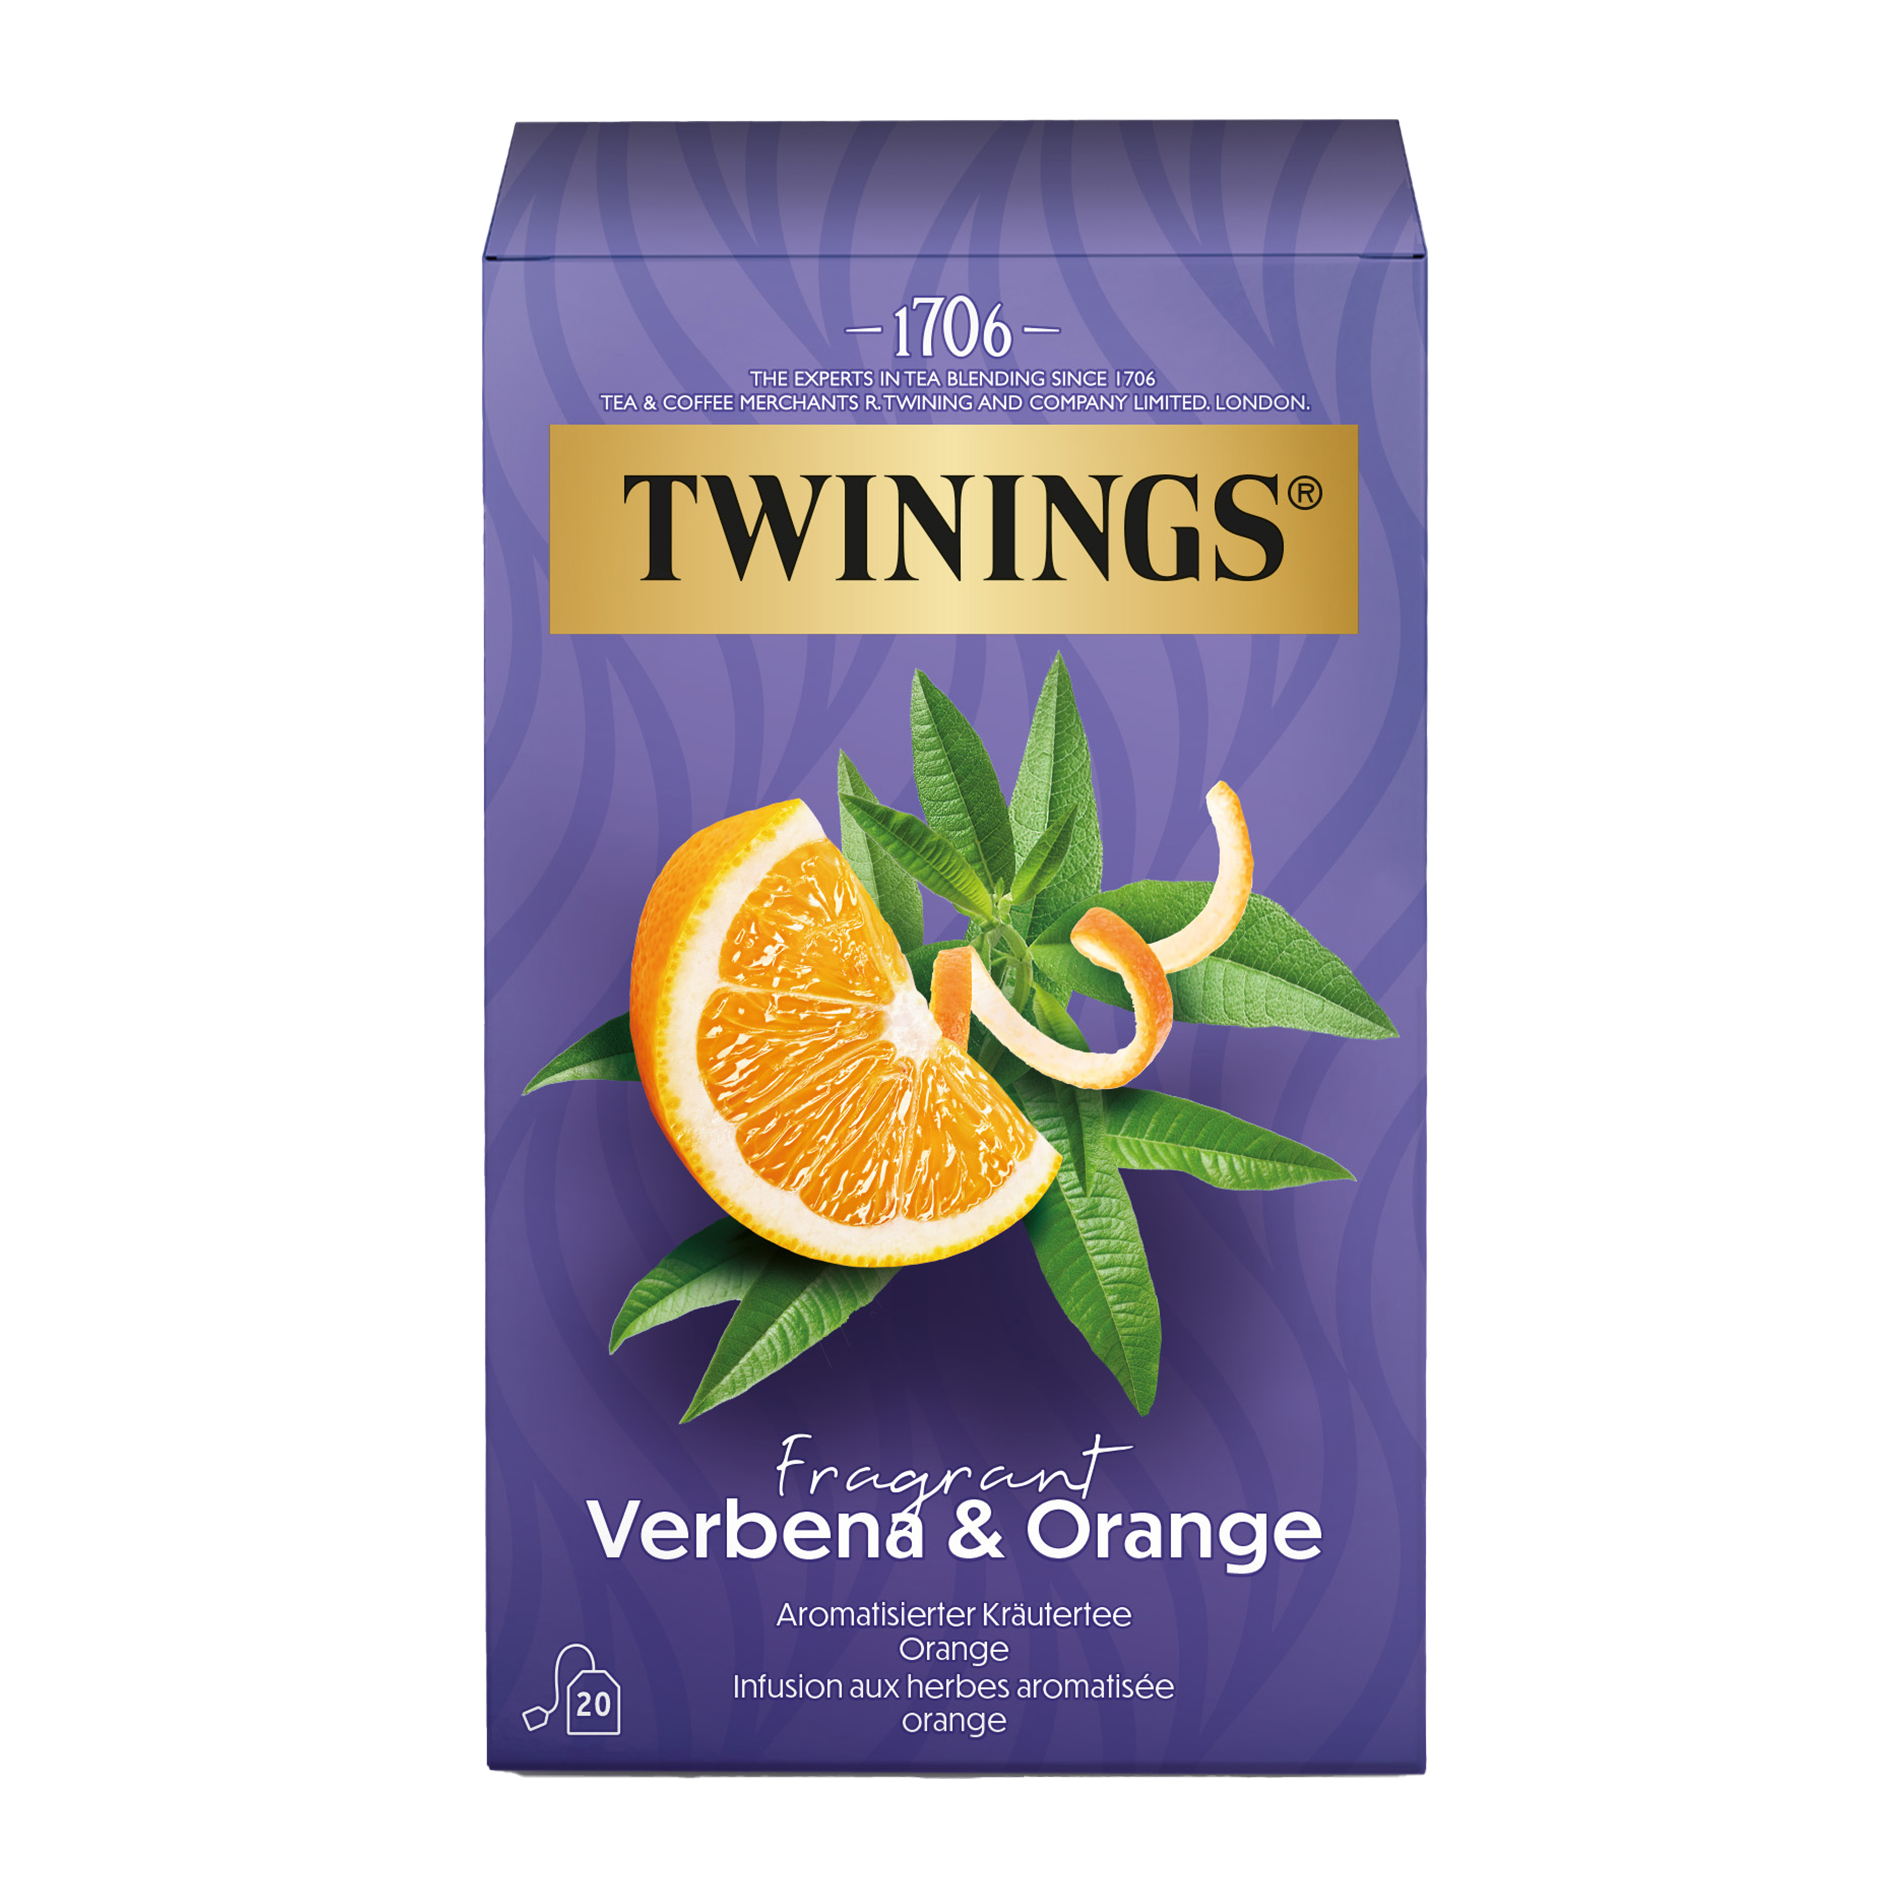 Twinings Fragrant Verveine & Orange